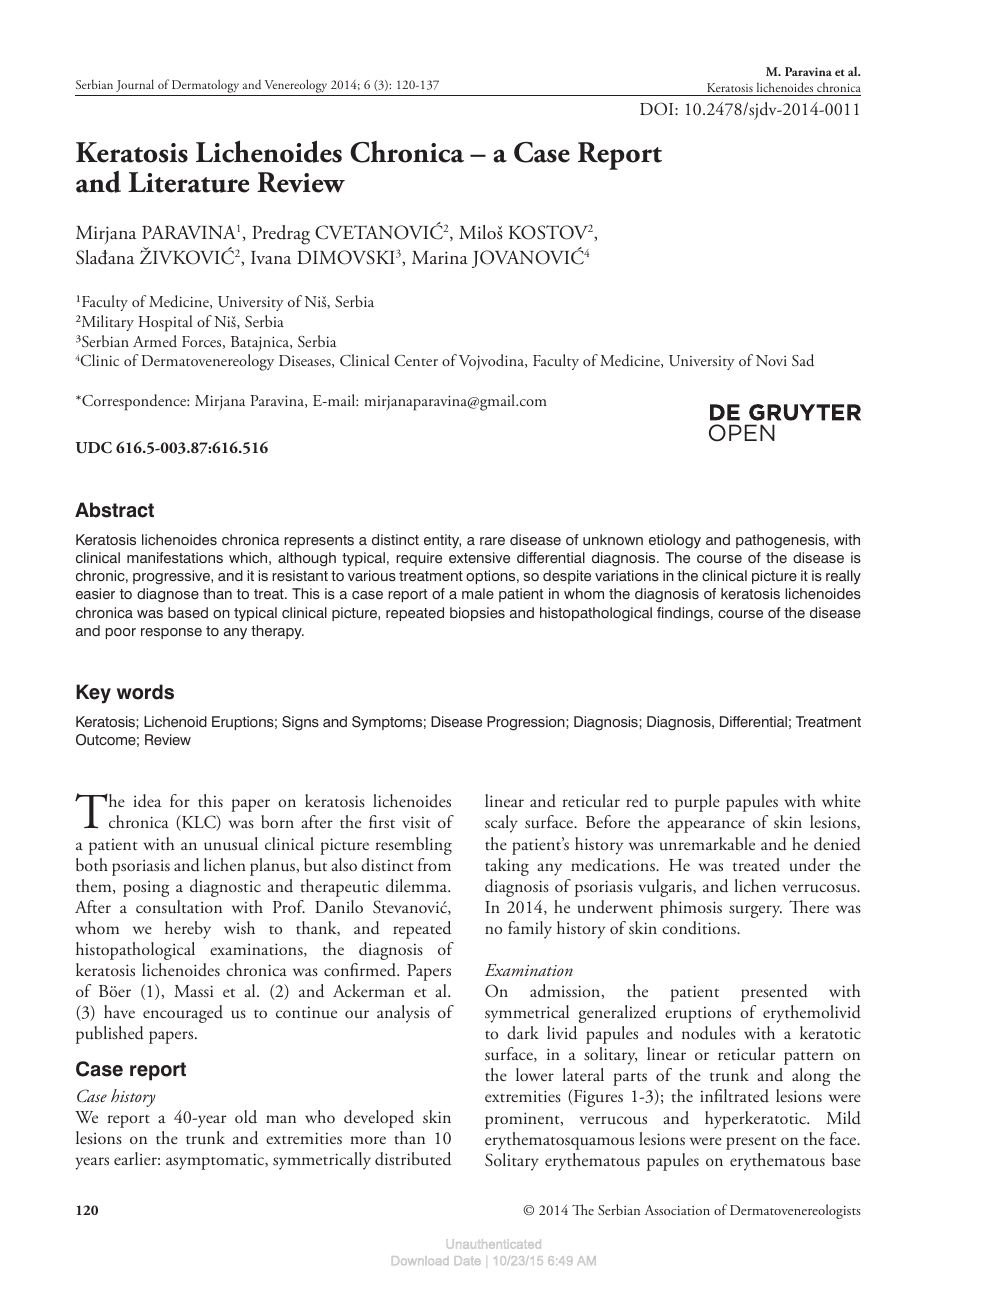 Keratosis Lichenoides Chronica A Case Report And Literature